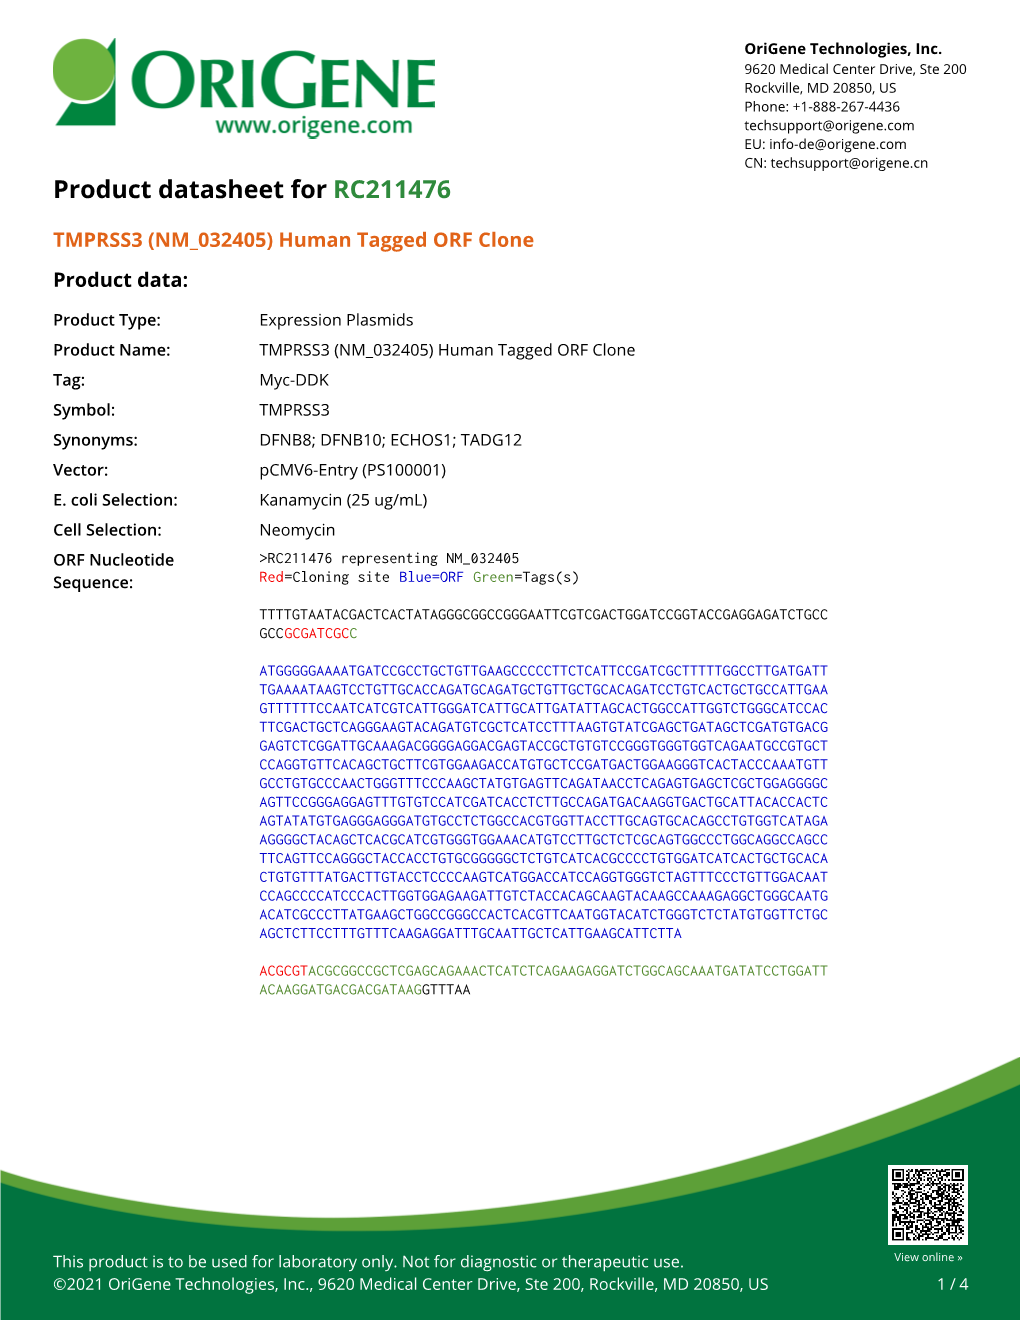 TMPRSS3 (NM 032405) Human Tagged ORF Clone Product Data